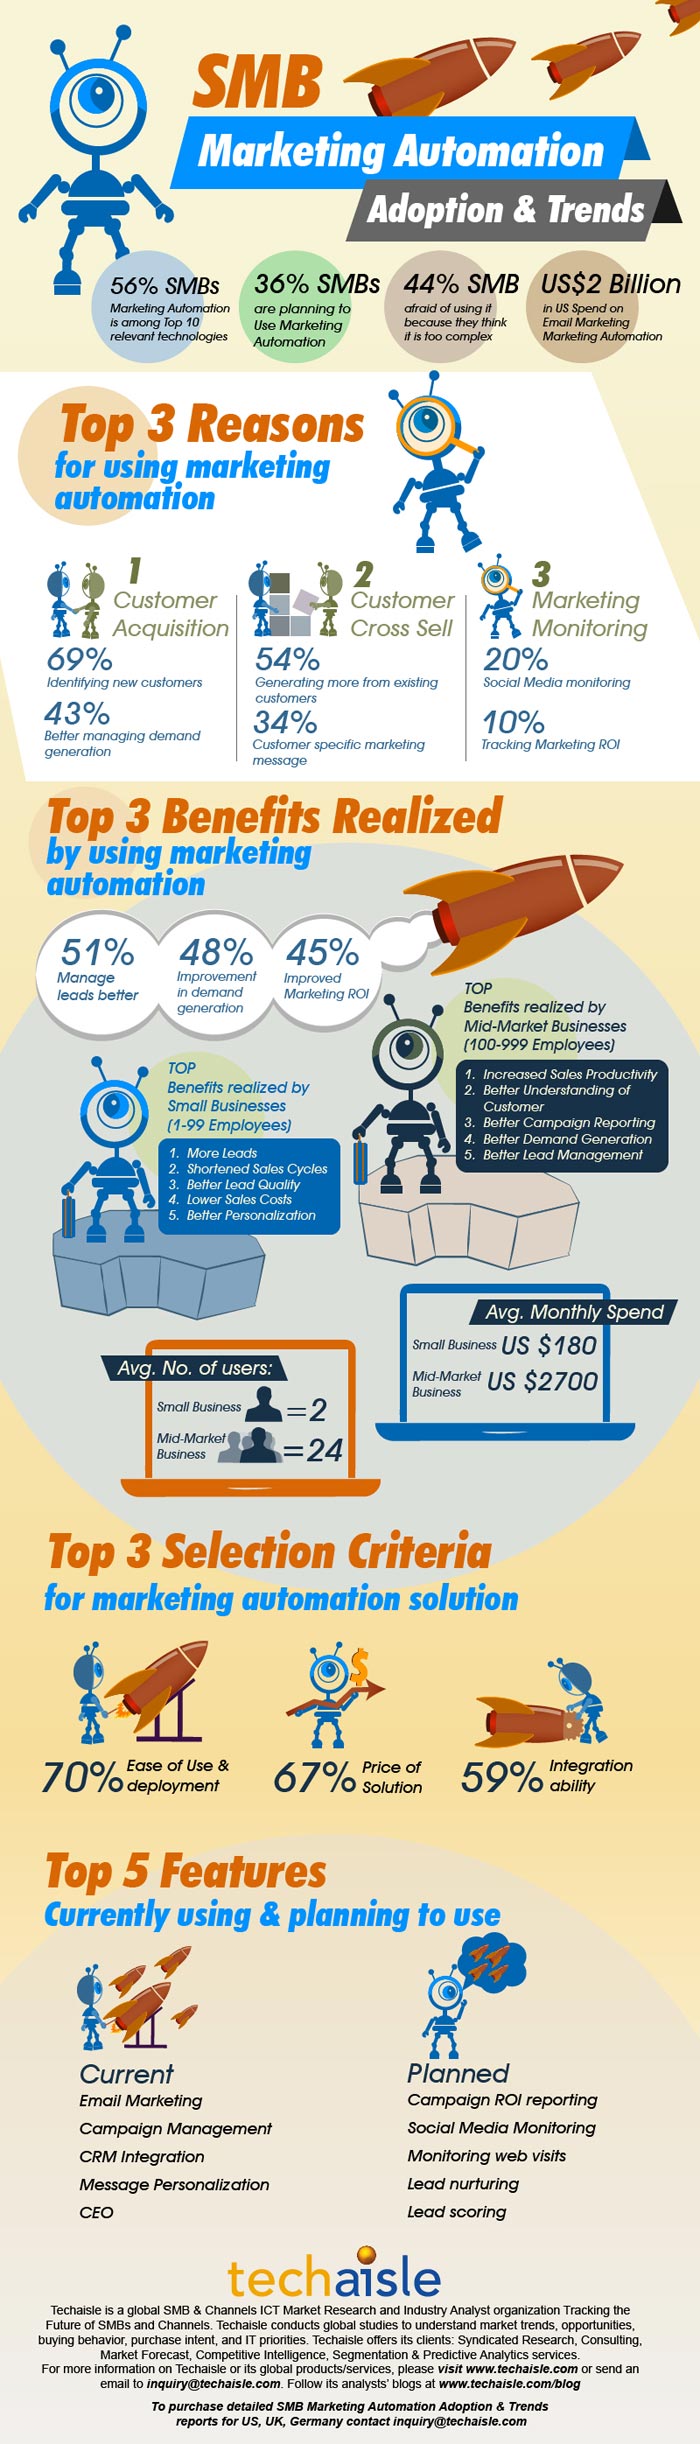 techaisle-smb-marketing-automation-infographic